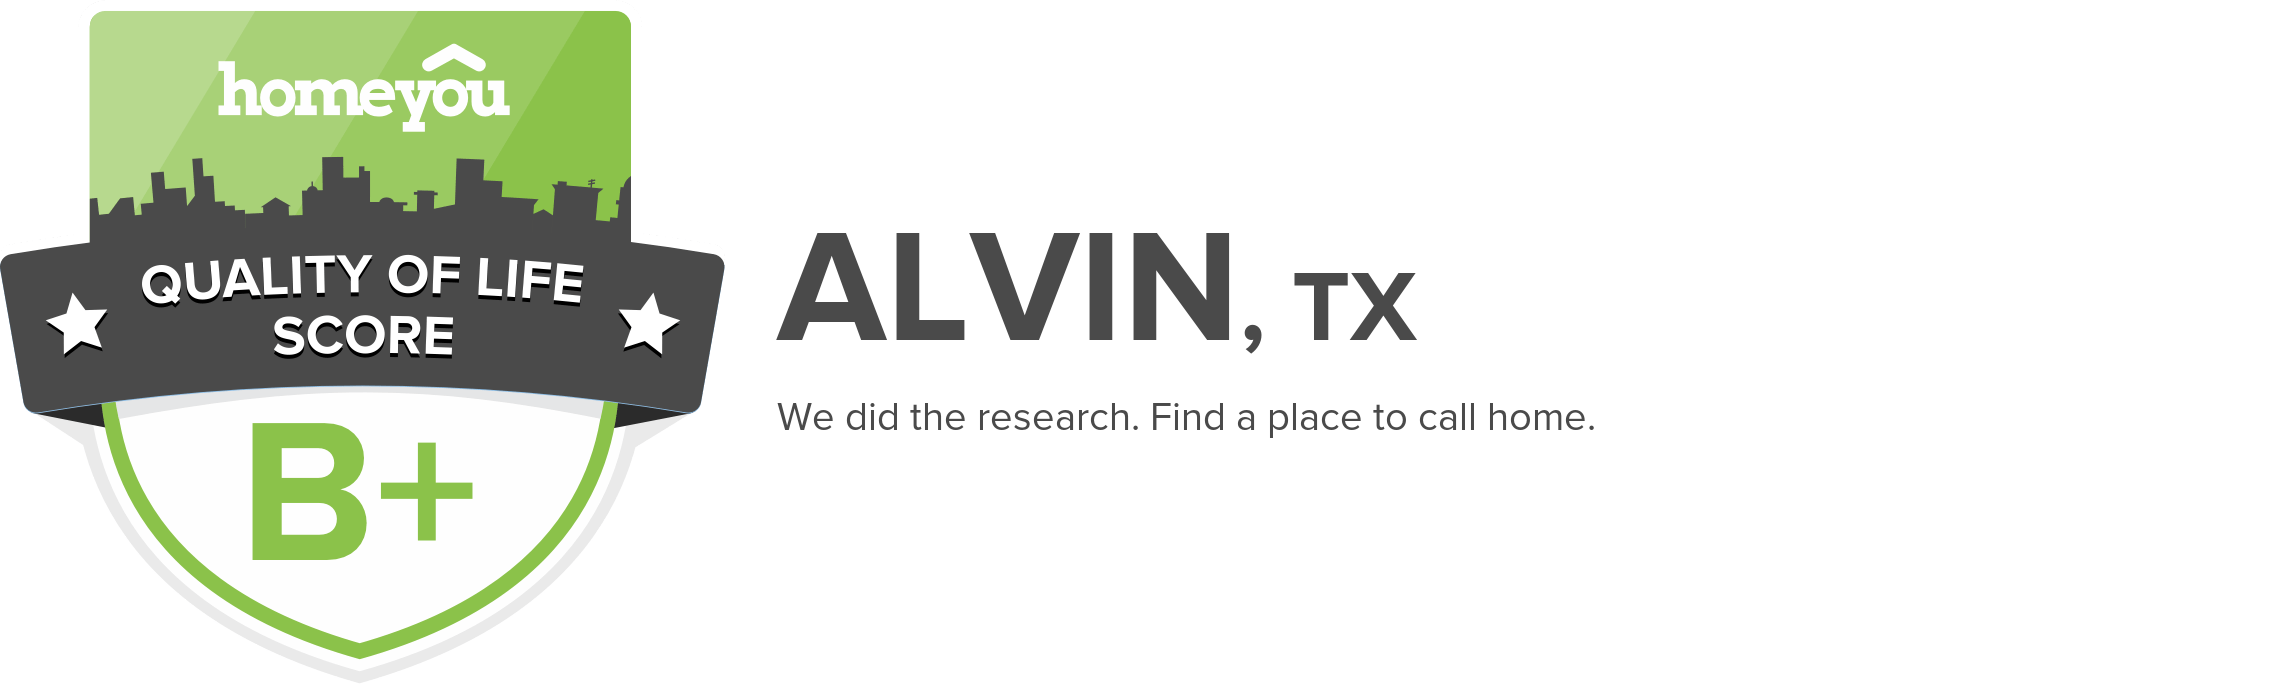 Alvin, TX